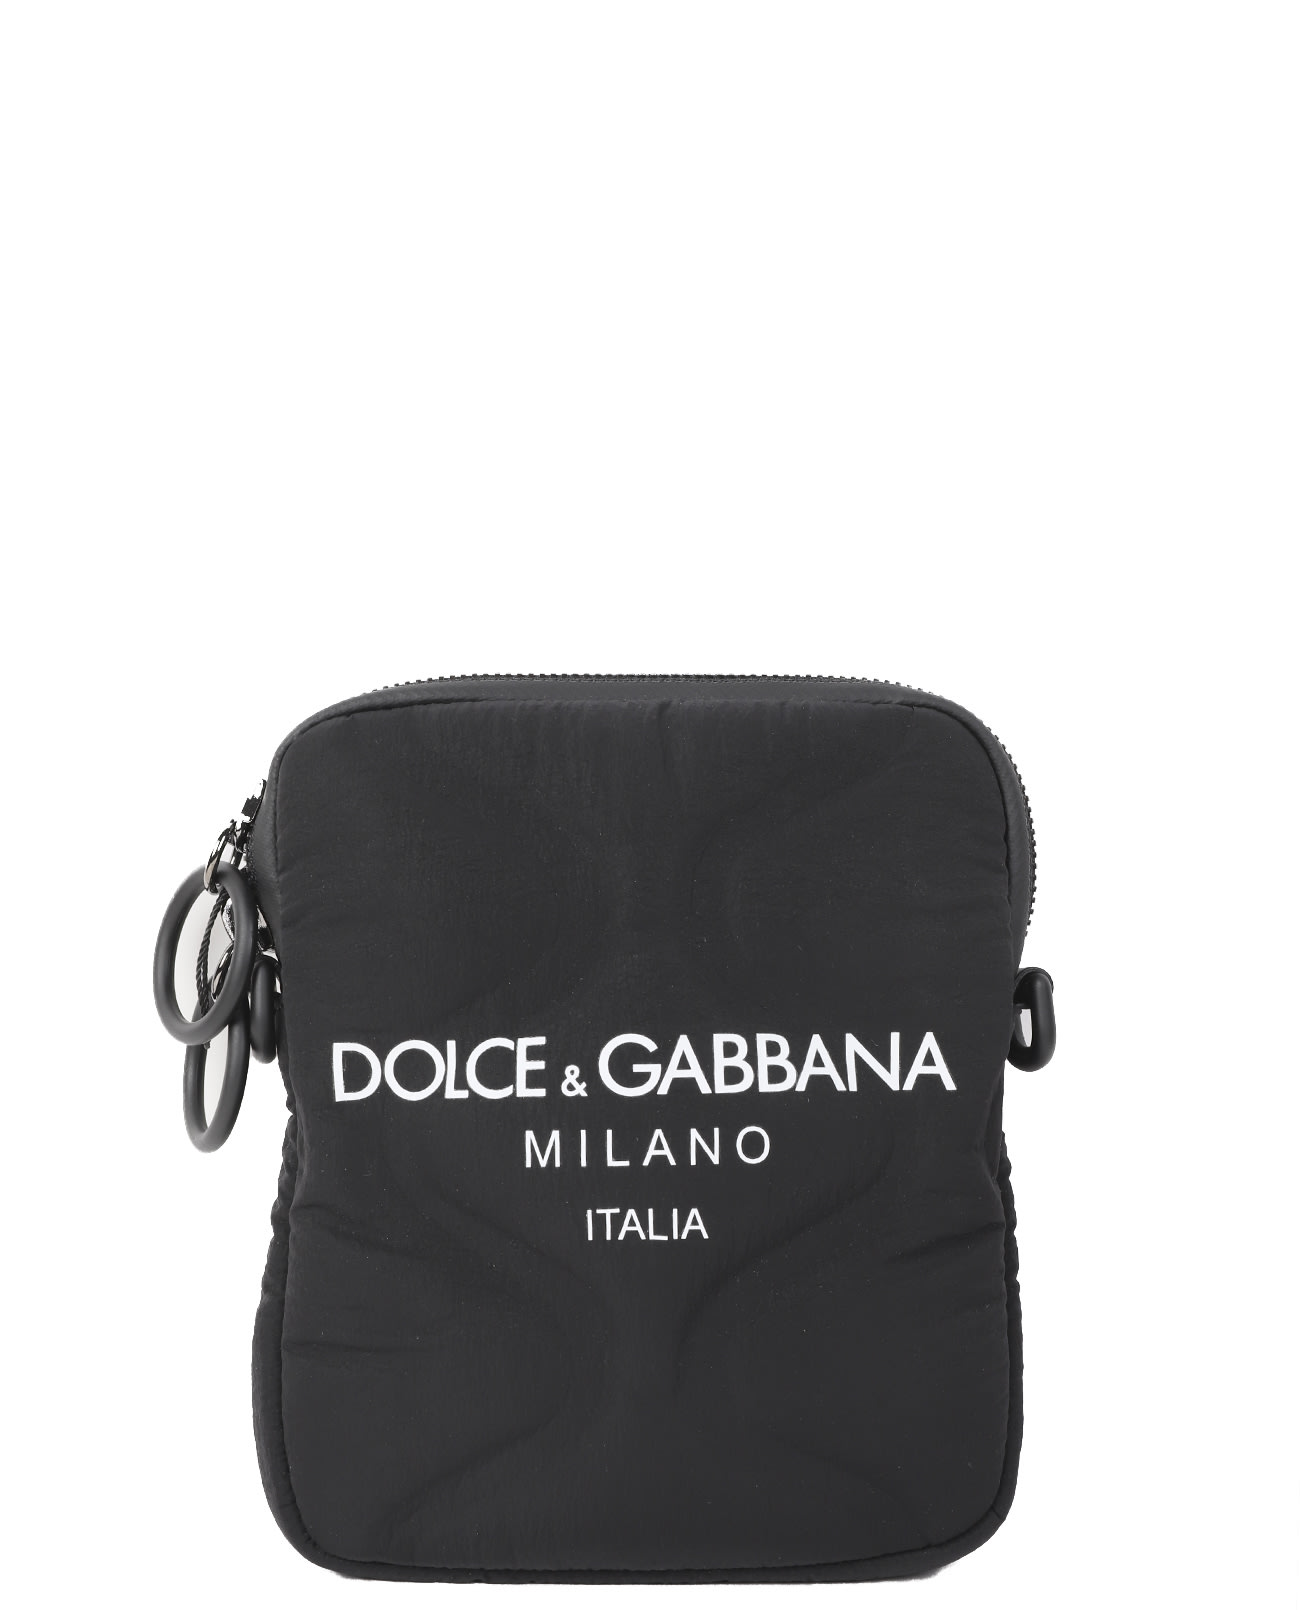 DOLCE & GABBANA BLACK LOGO MESSENGER BAG,BM1848 AW14089690